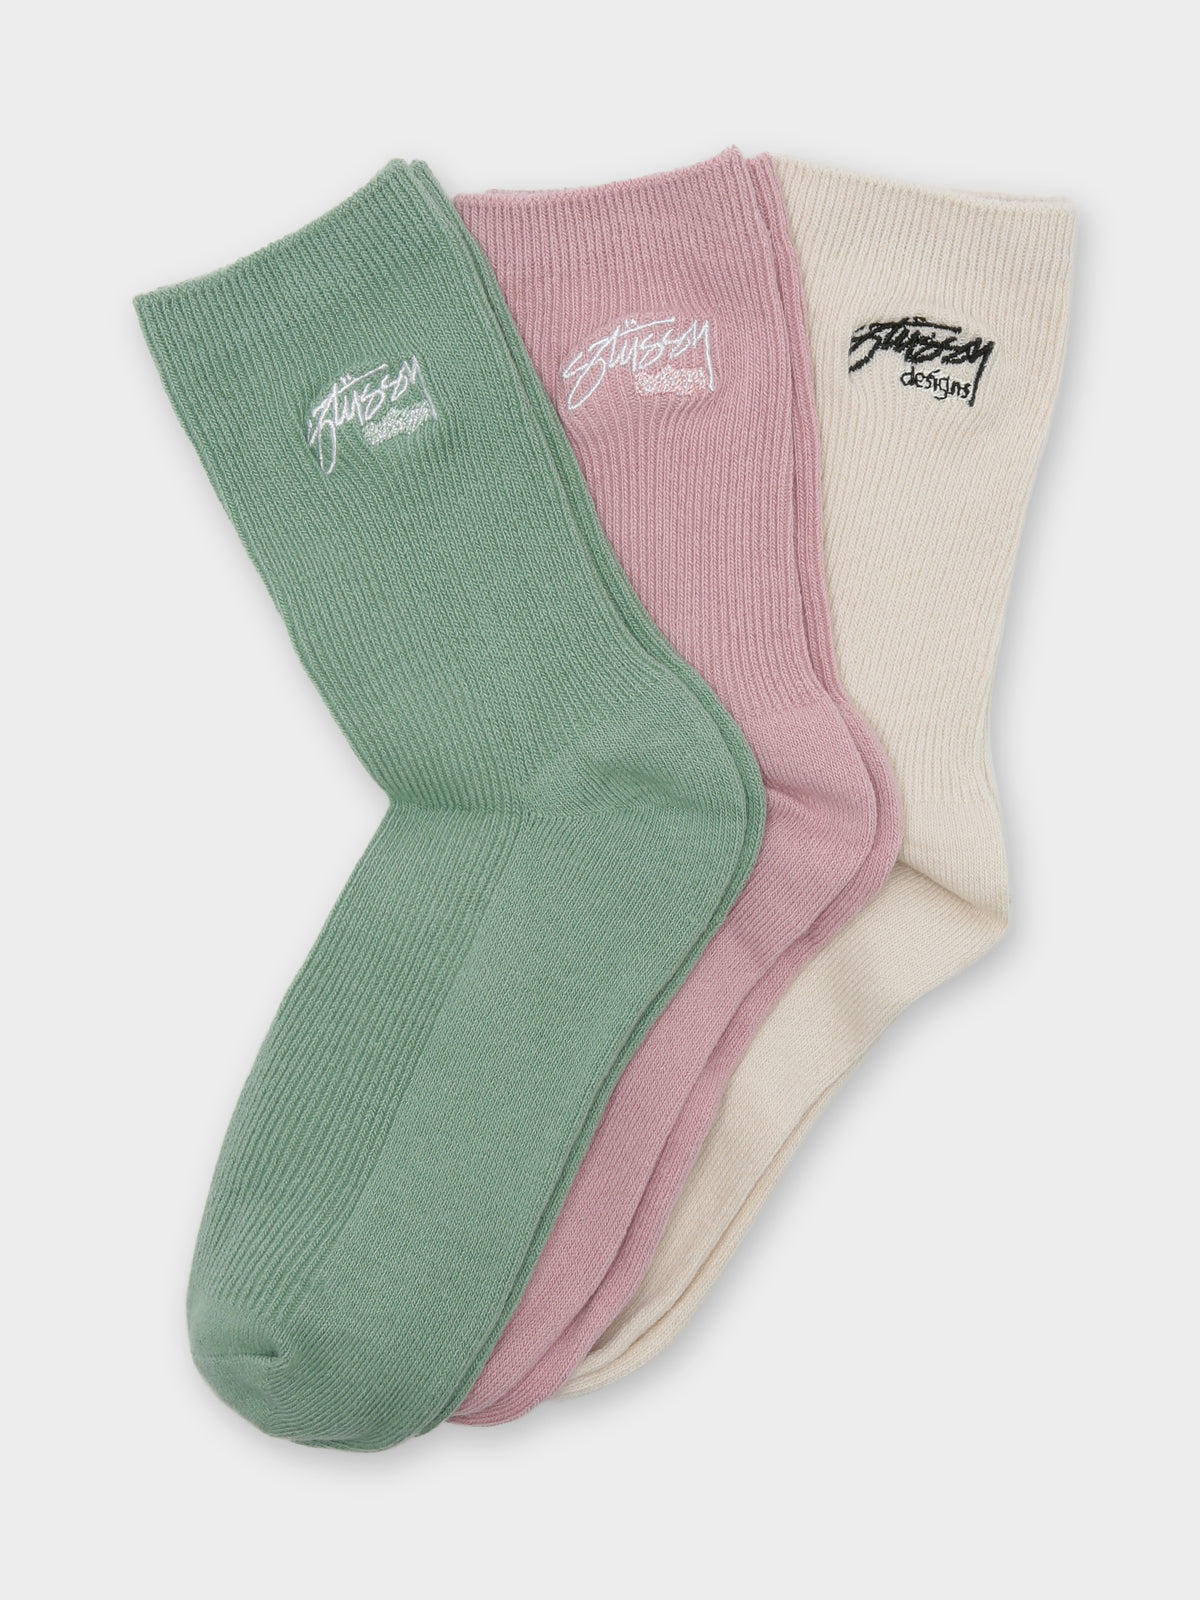 3 Pairs of Womens Design Rib Socks in Green, Pink &amp; Beige